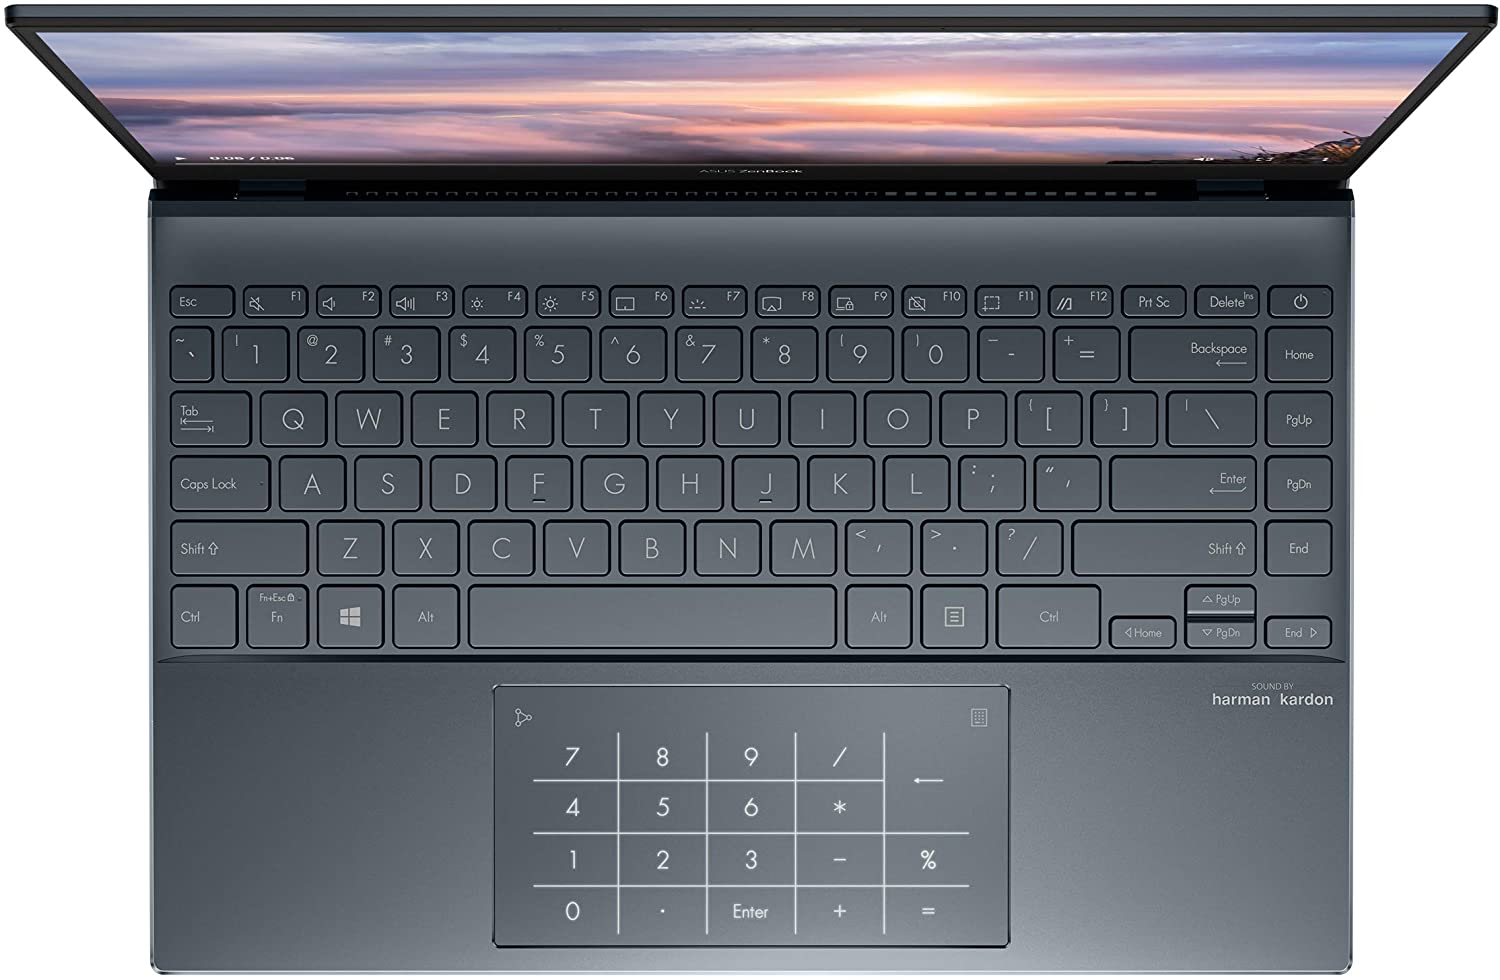 ASUS ZenBook 13 Ultra-Slim Laptop 13.3” FHD NanoEdge Bezel Display, Intel Core i5-1035G1, 8GB LPDDR4X RAM, 256GB PCIe SSD, NumberPad, Thunderbolt, Wi-Fi 6, Windows 10 Pro, Pine Grey, UX325JA-XB51